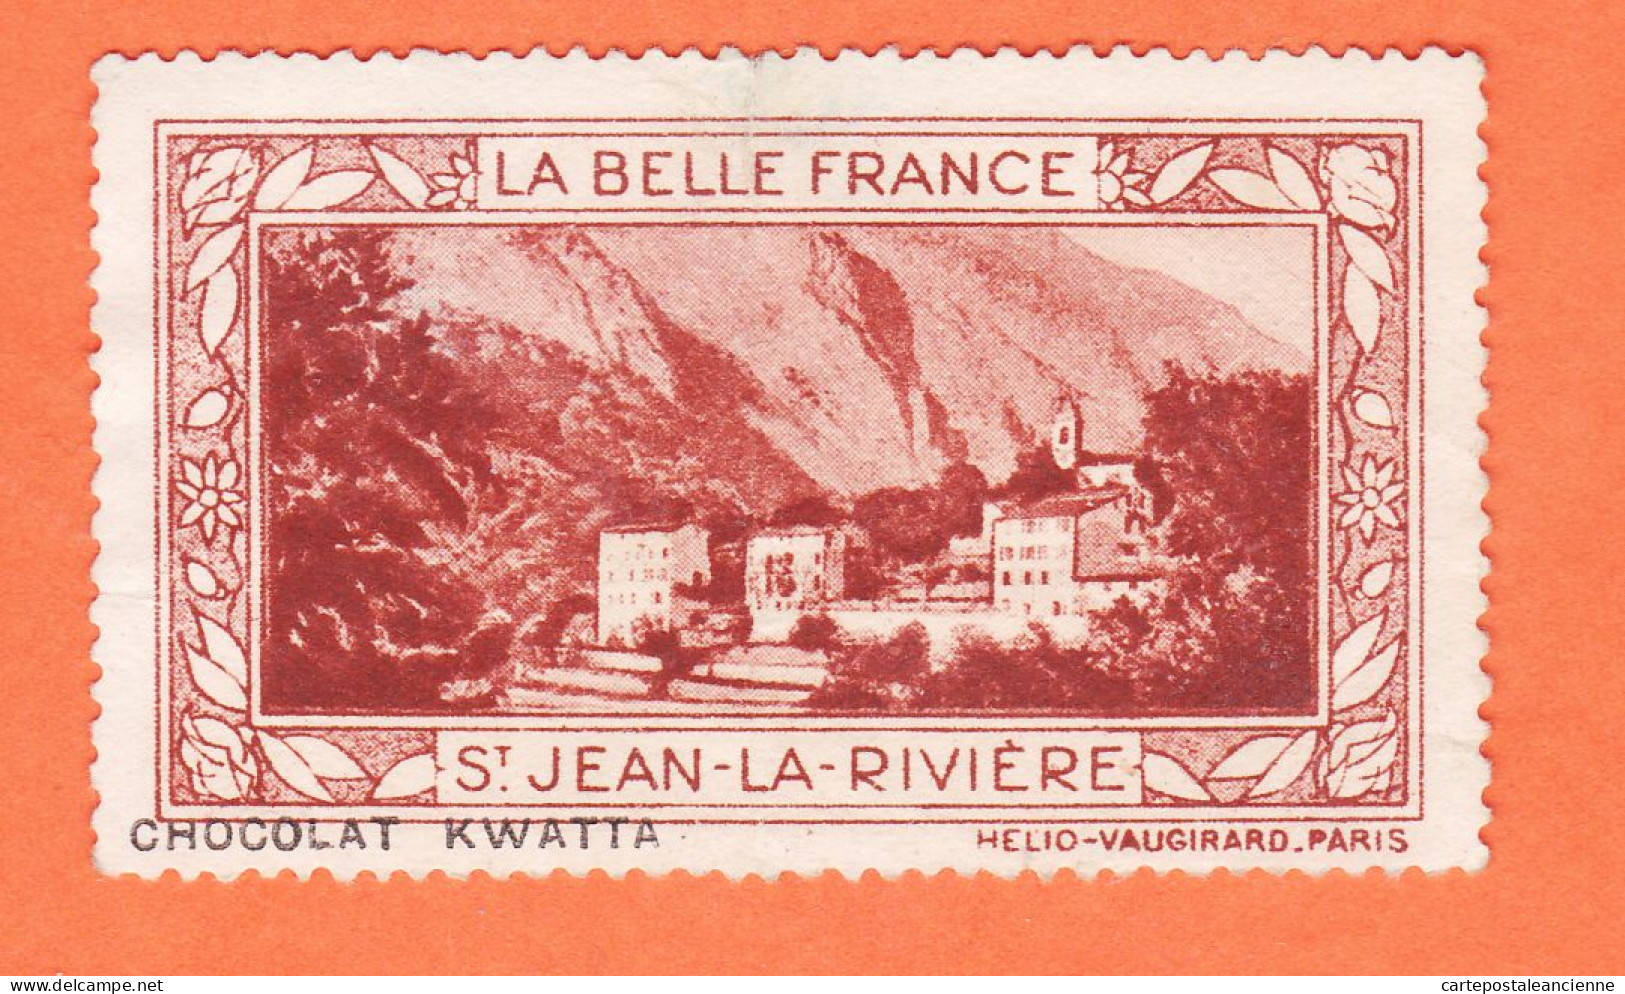 05431 / ⭐ ◉ SAINT-JEAN-RIVIERE 06-Alpes Maritimes Pub Chocolat KWATTA Vignette Collection BELLE FRANCE HELIO-VAUGIRARD - Toerisme (Vignetten)